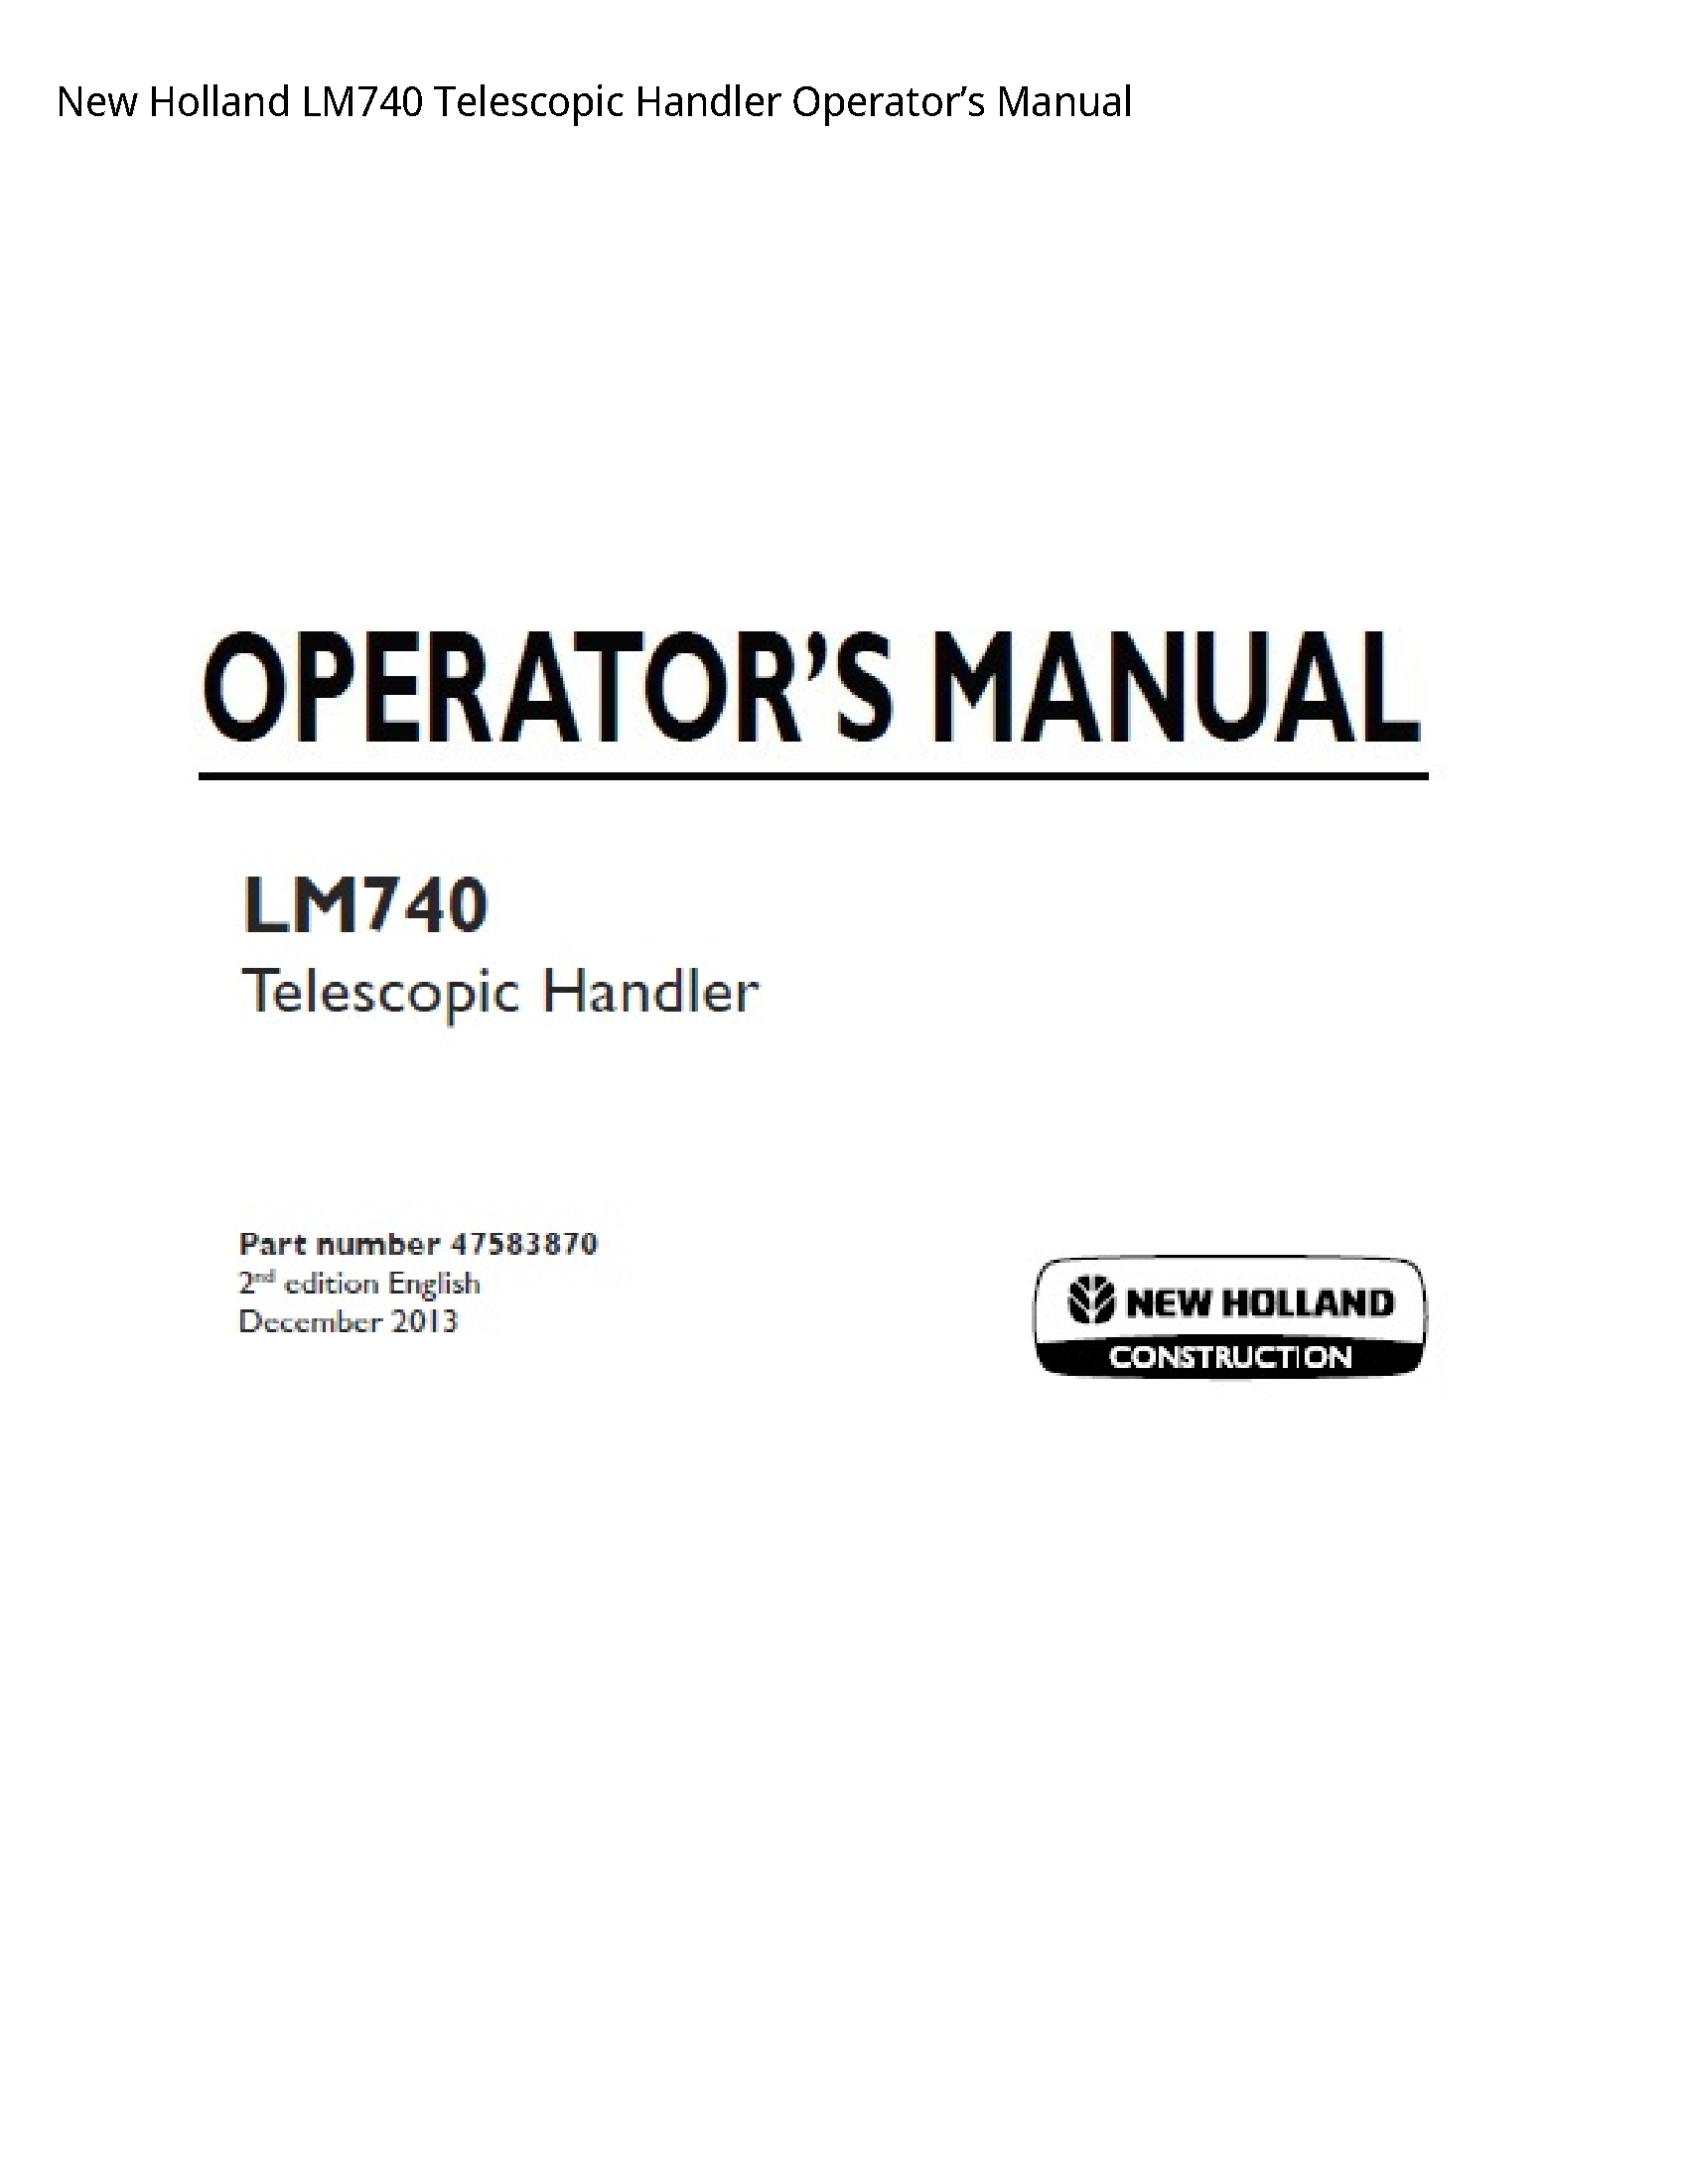 New Holland LM740 Telescopic Handler Operator’s manual